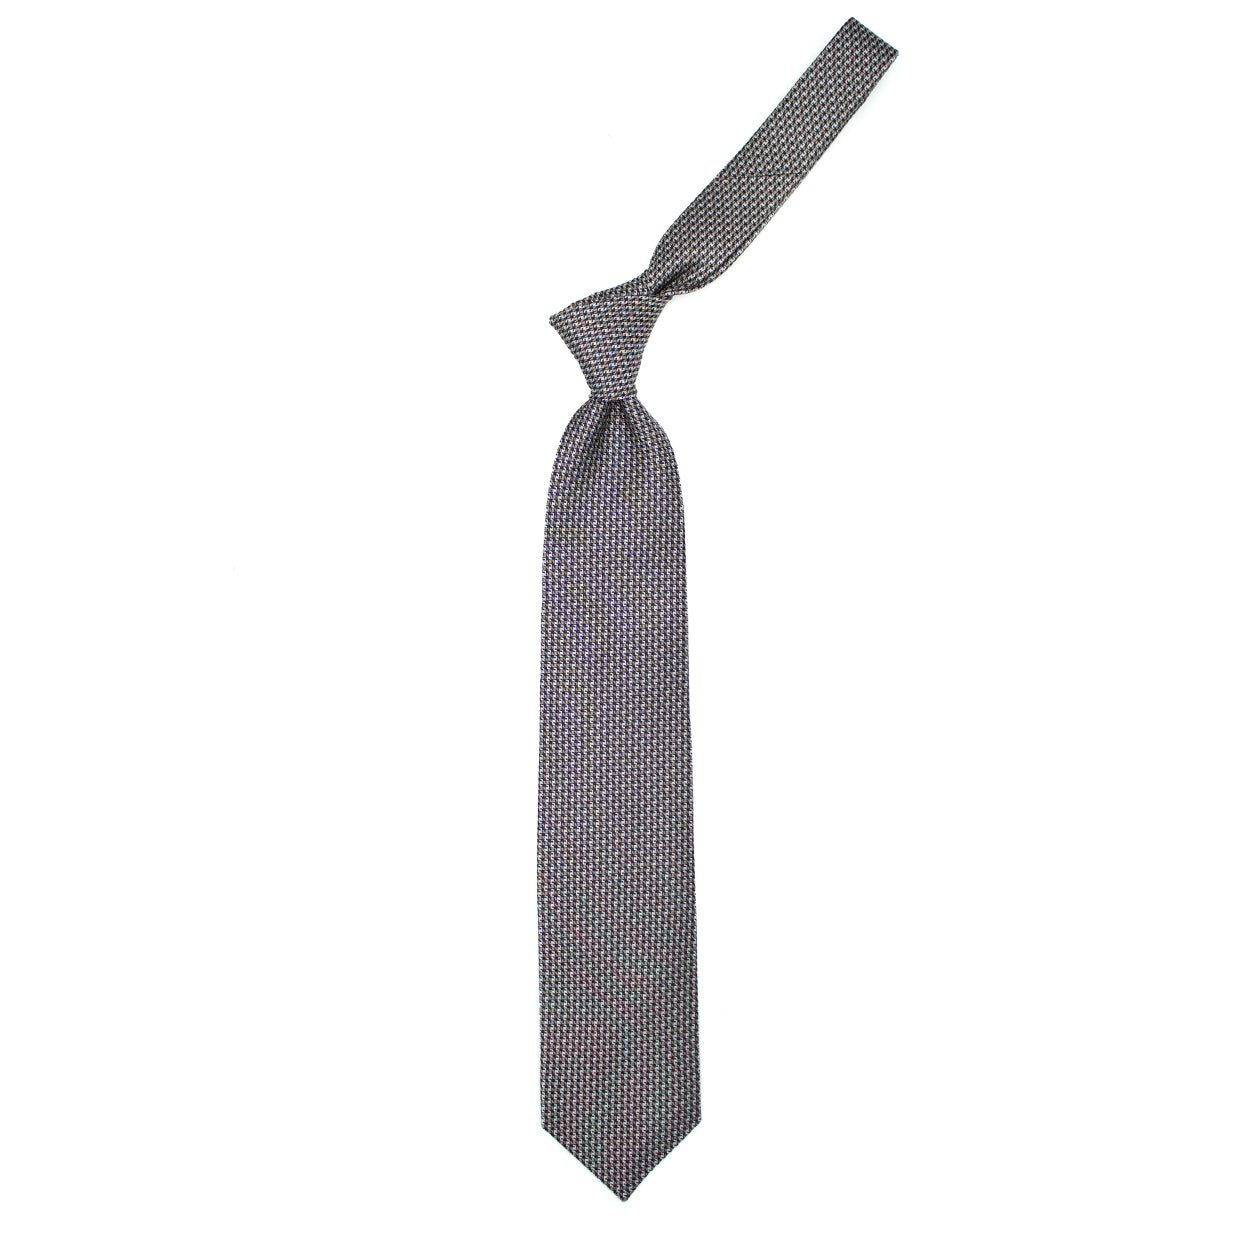 Cravatta tramata beige, bianca e nera